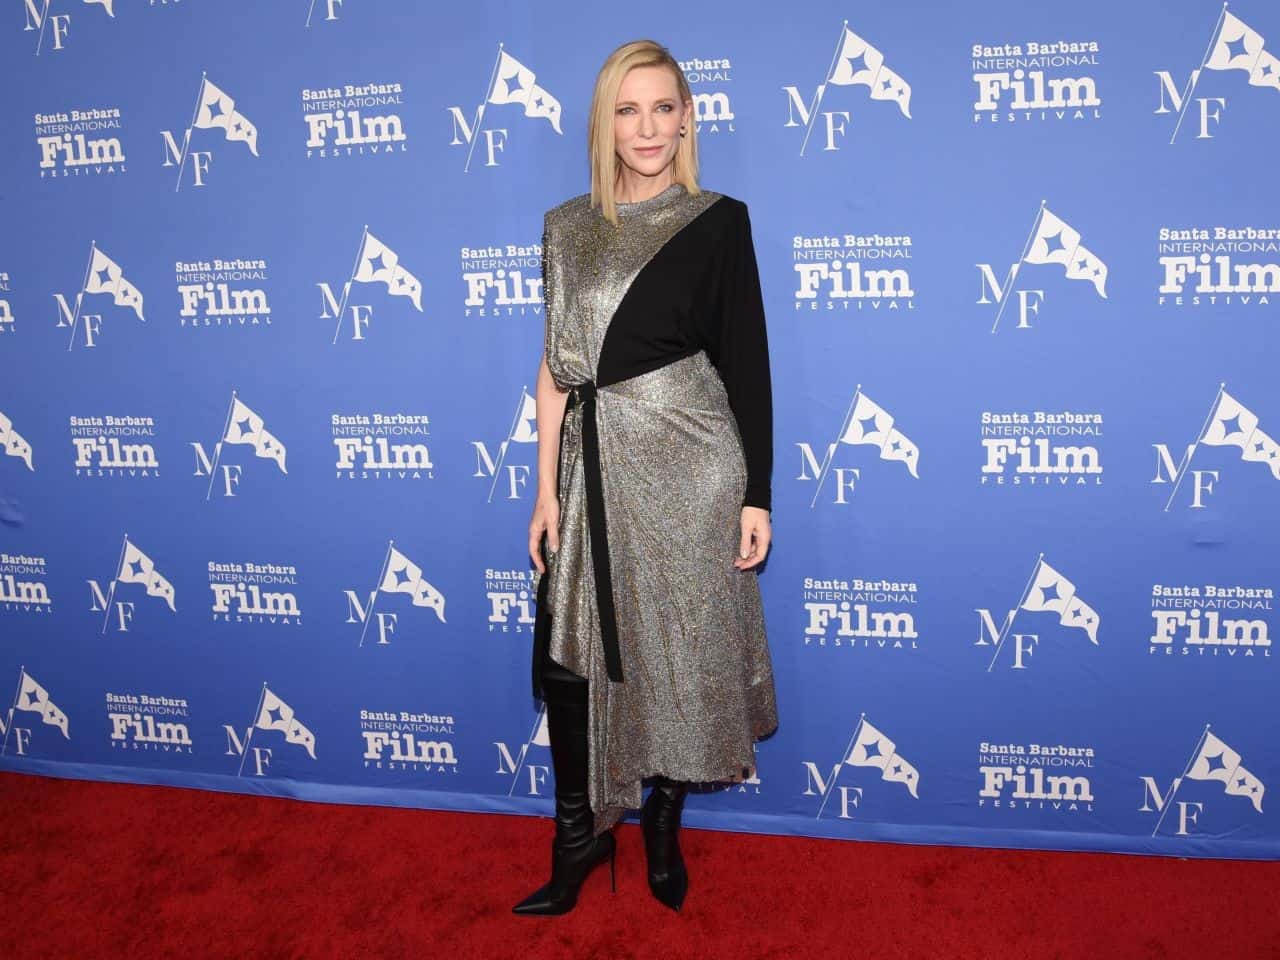 Cate Blanchett Made Stunning Red Carpet Appearance at Santa Barbara Film Festival